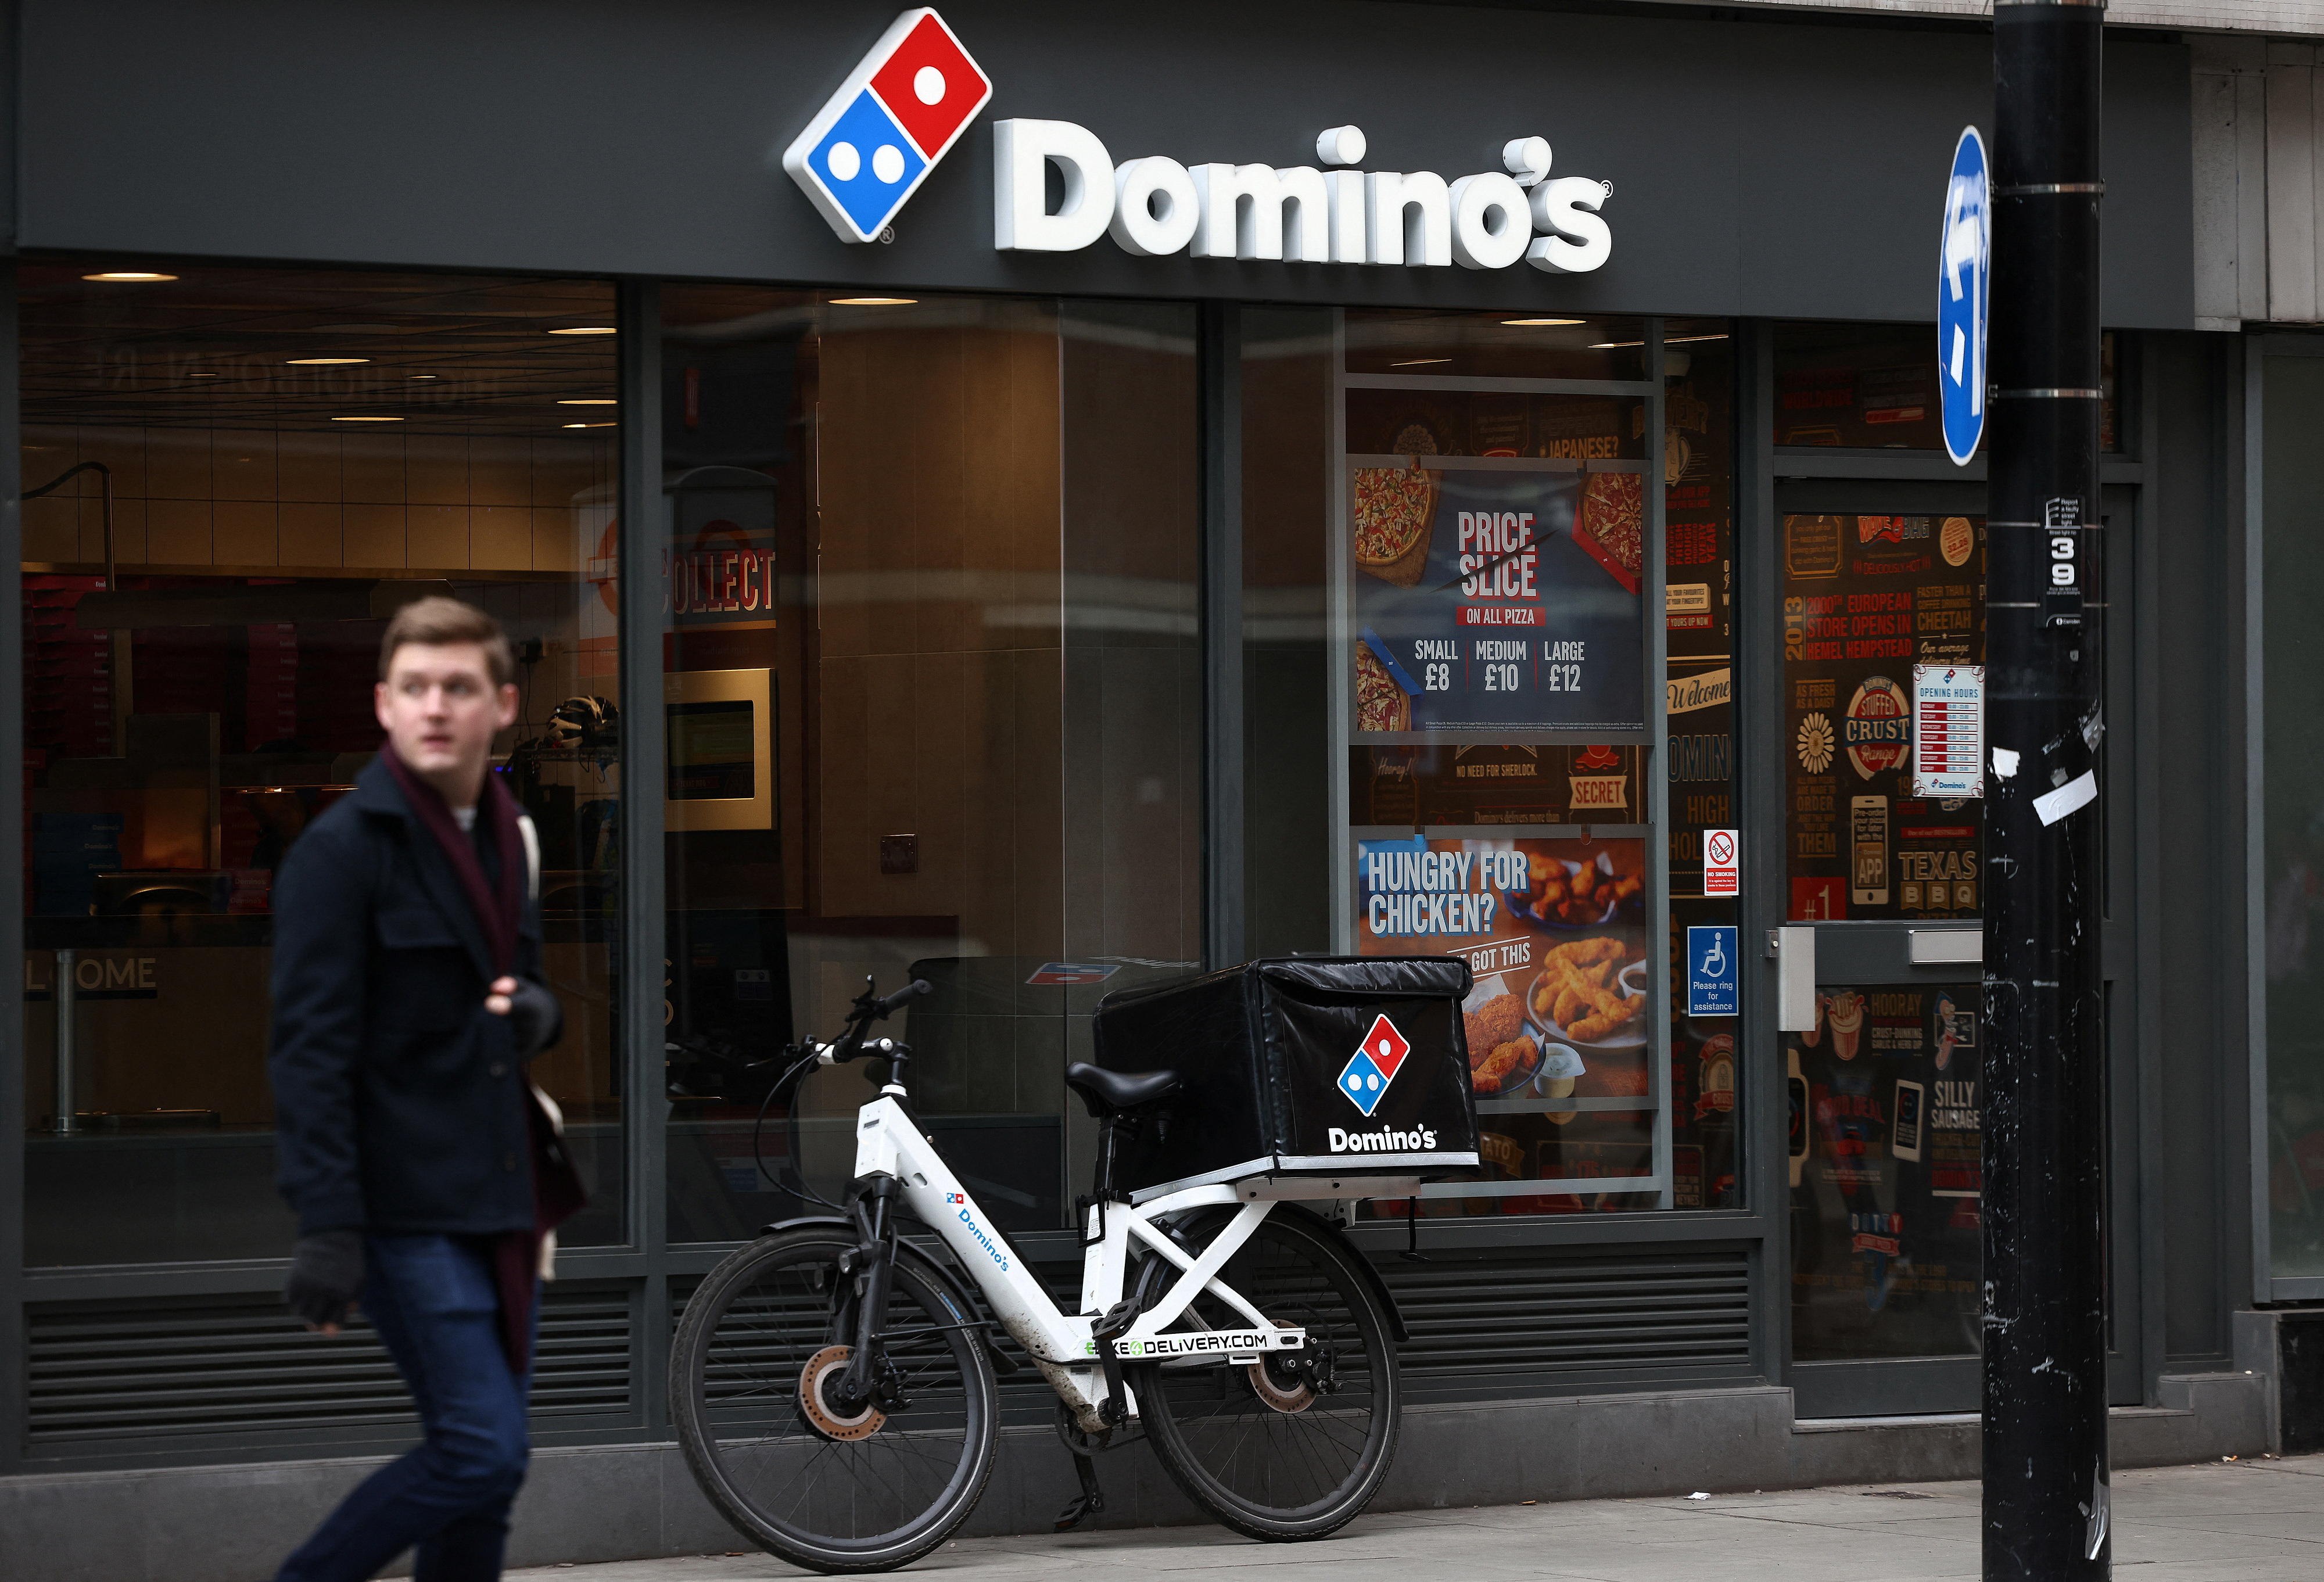 A person walks past a Domino's pizza restuarant in London